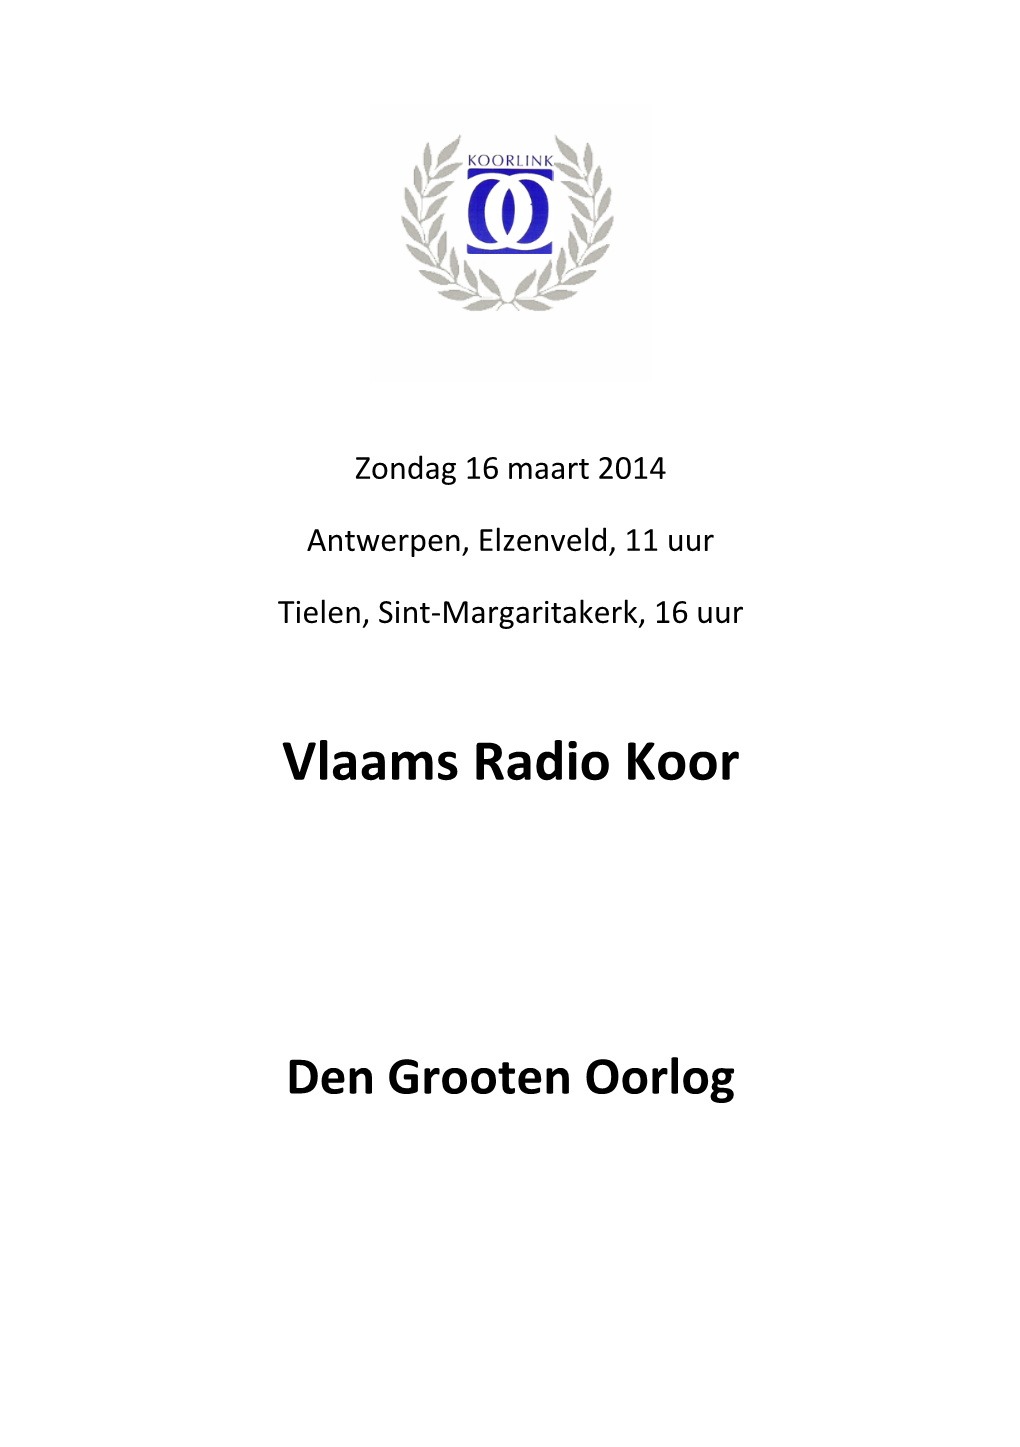 Vlaams Radio Koor